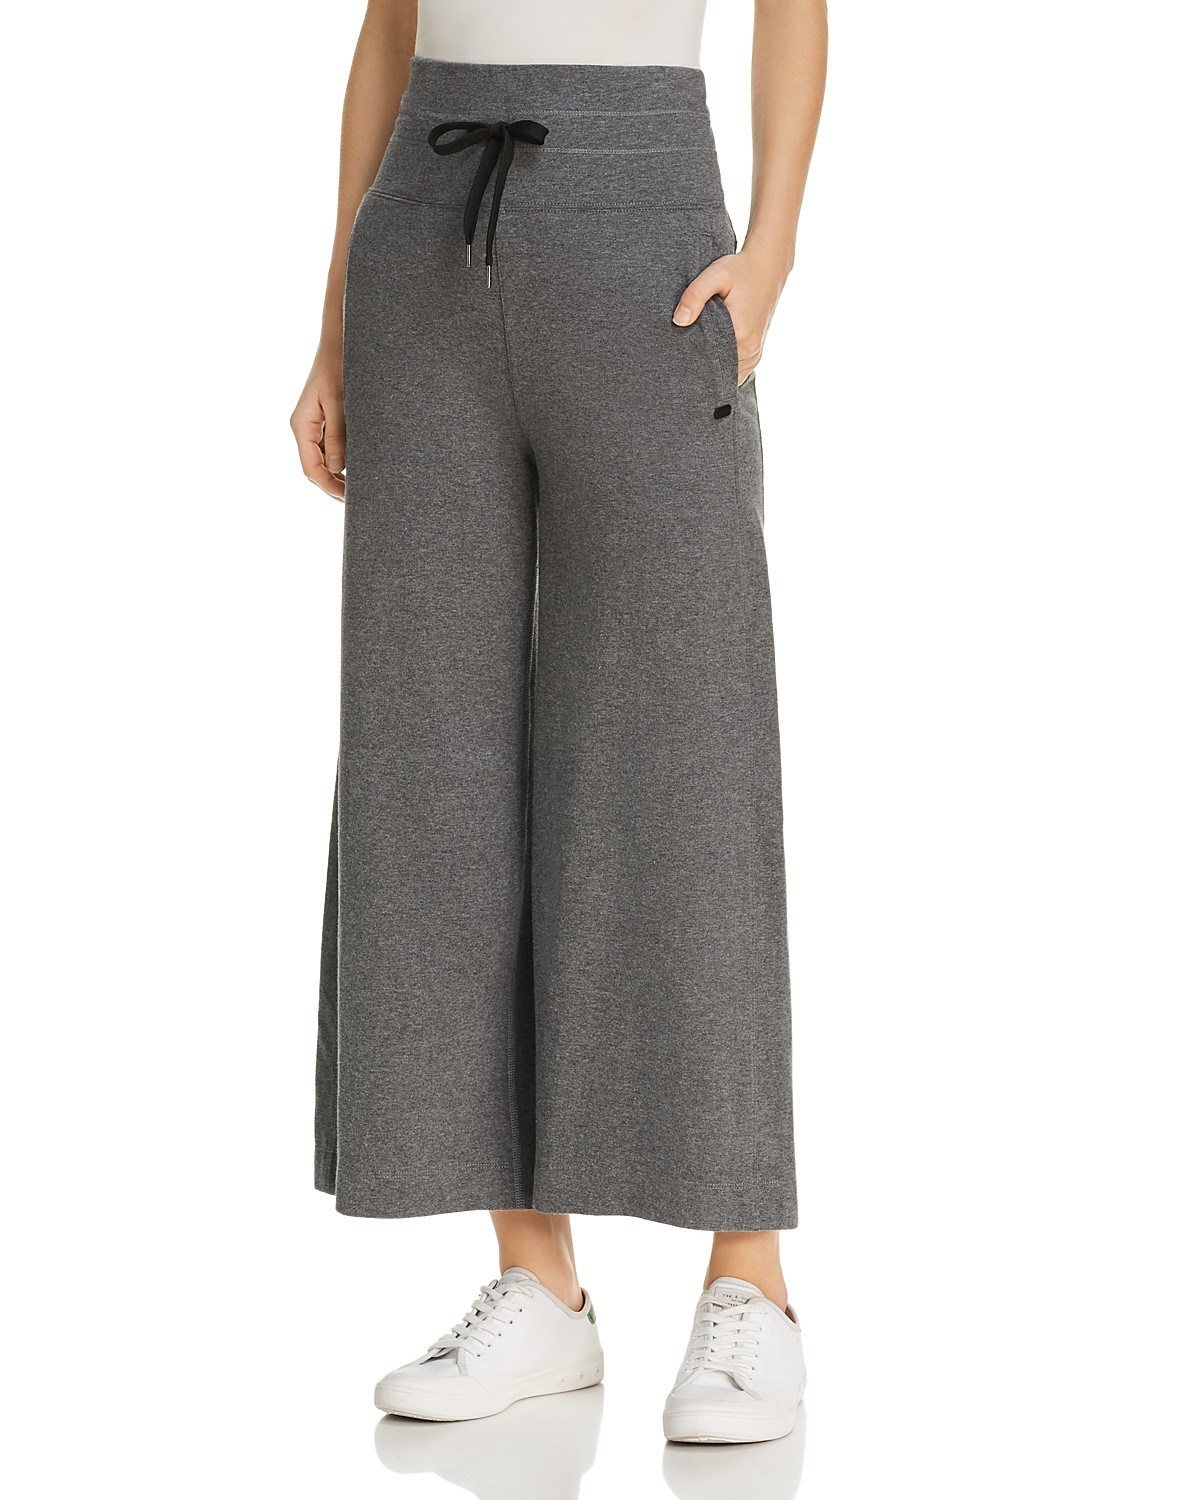 Newest Designs Women 100% Cotton Wide Leg Drawstring Pants